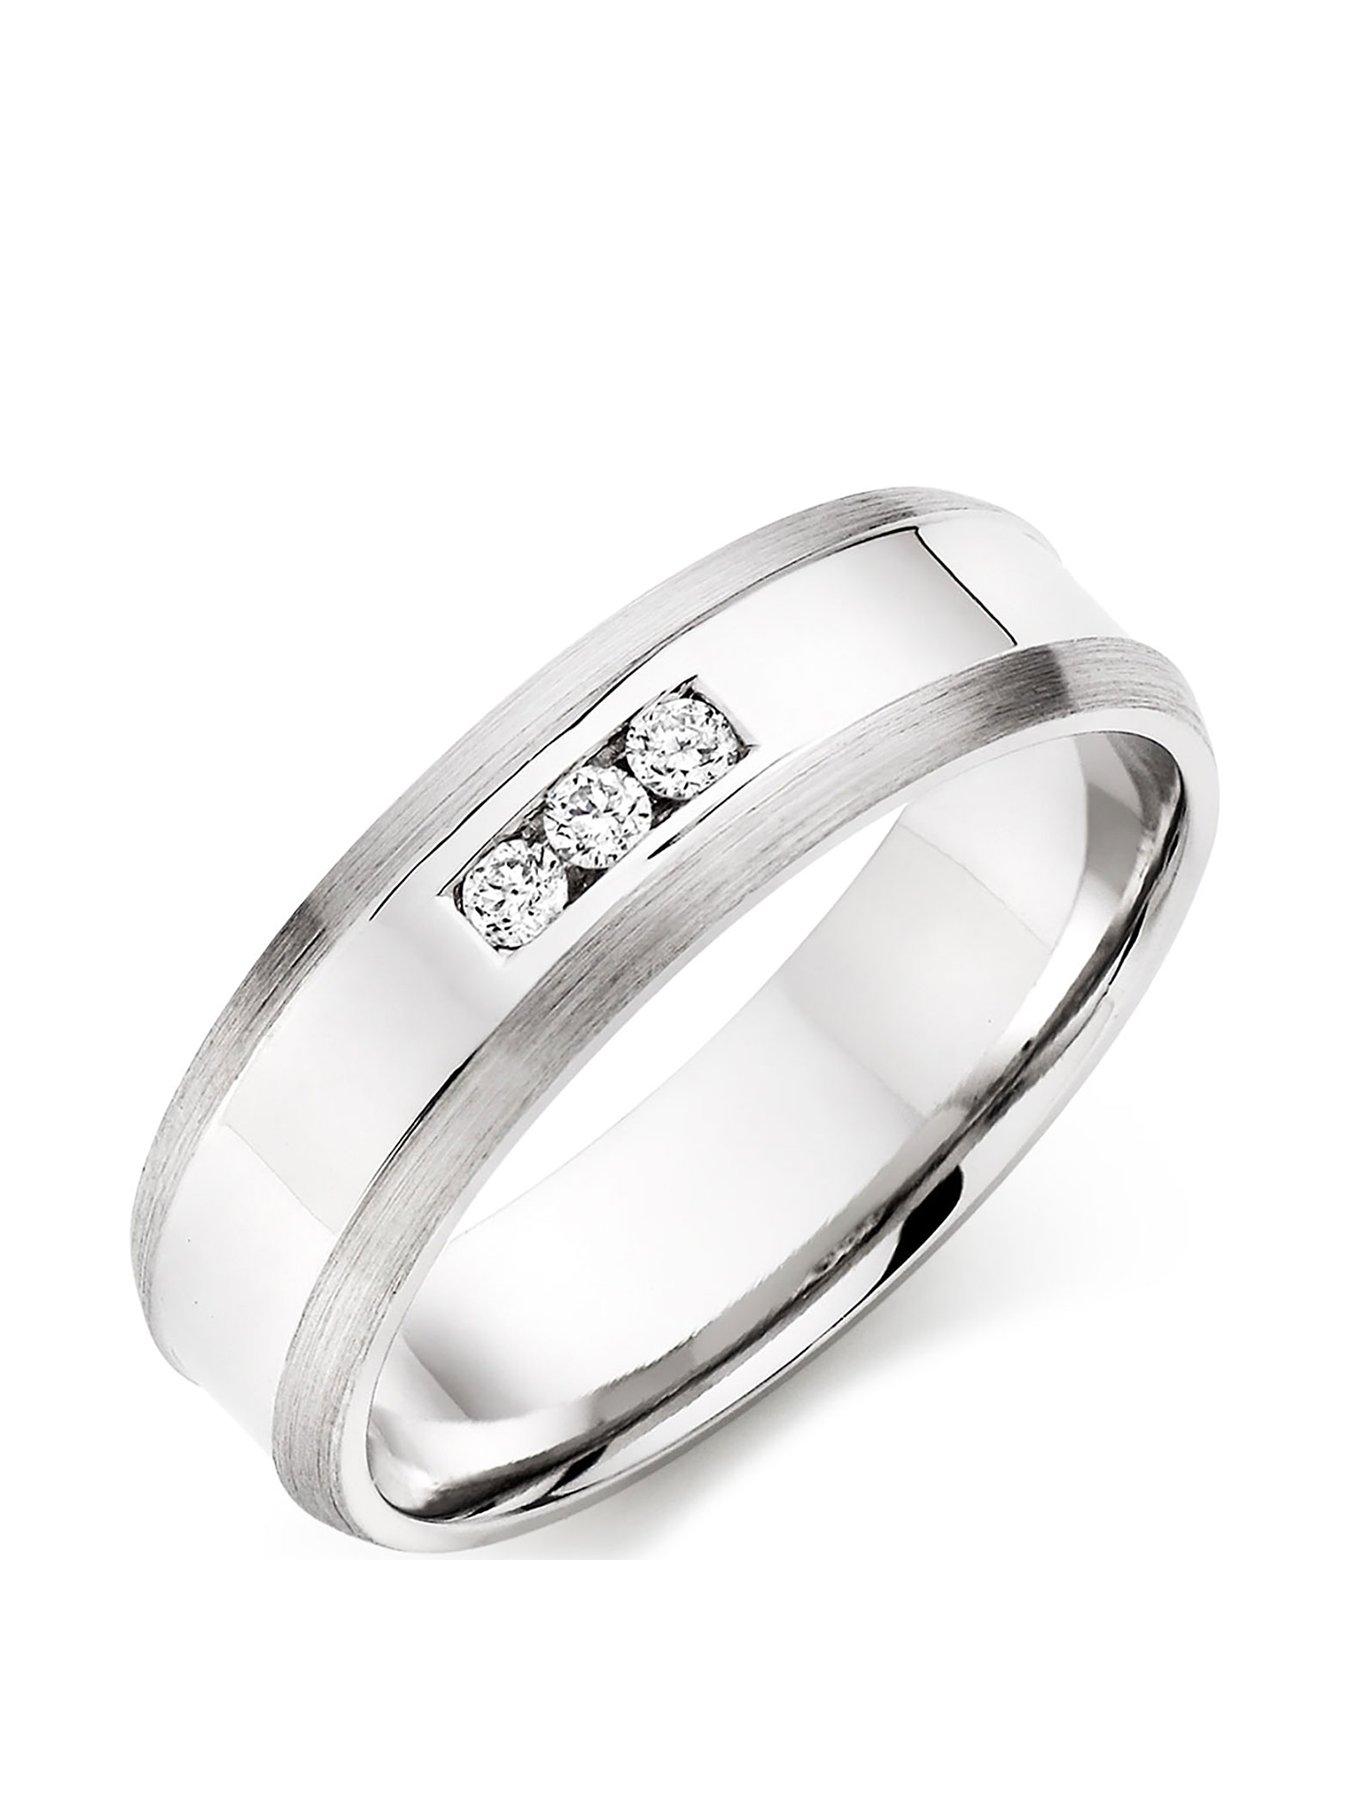 Beaverbrooks 9ct White Gold Diamond Men's Wedding Ring | littlewoods.com